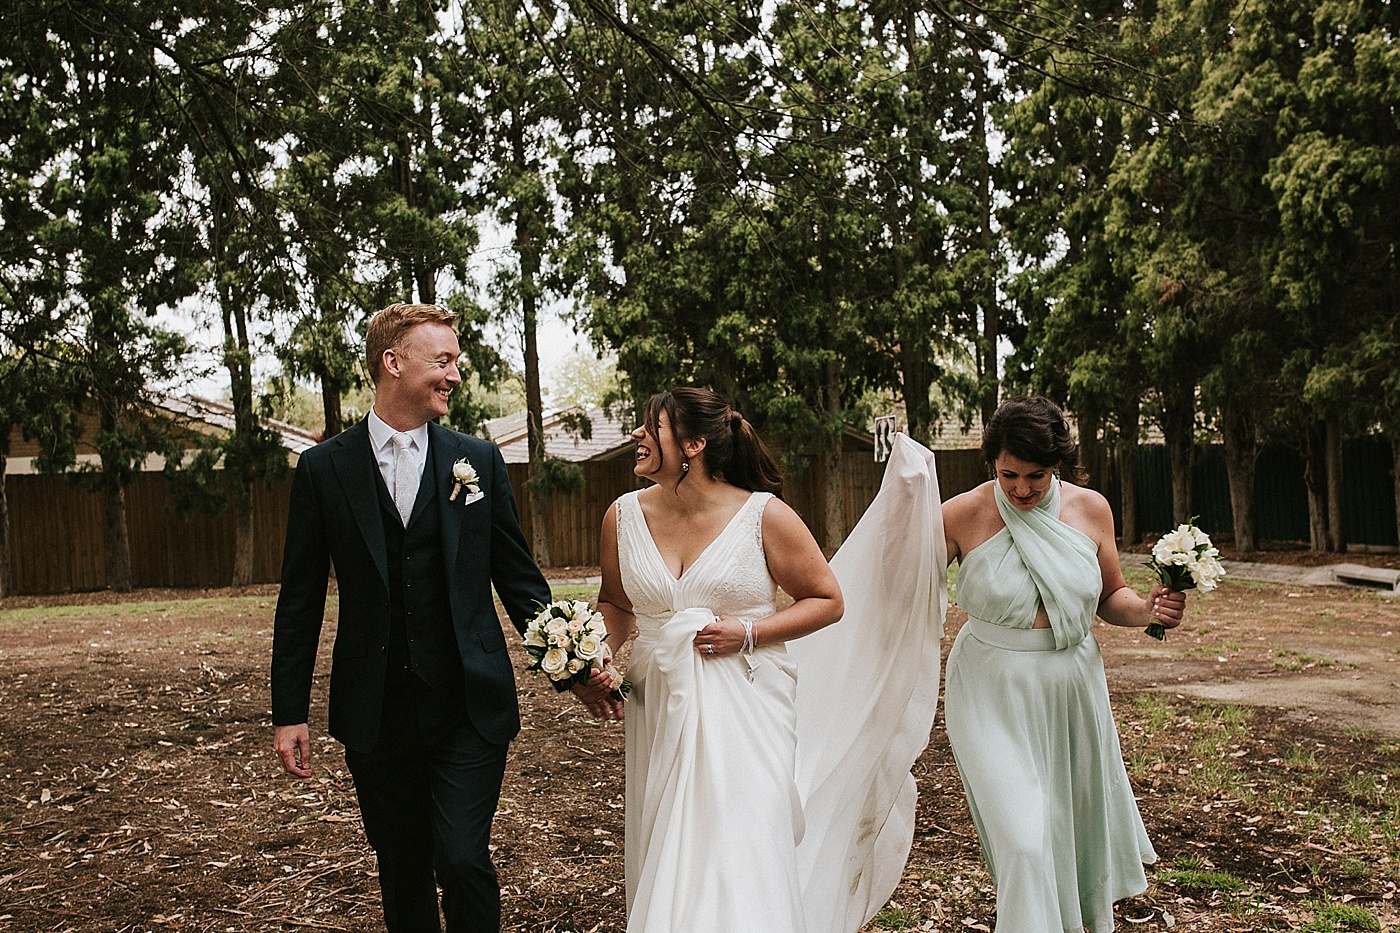 Brooke&David_Melbourne-Quirky-Relaxed-Fun-Casual-Backyard-Wedding_Melbourne-Wedding-Photography-61